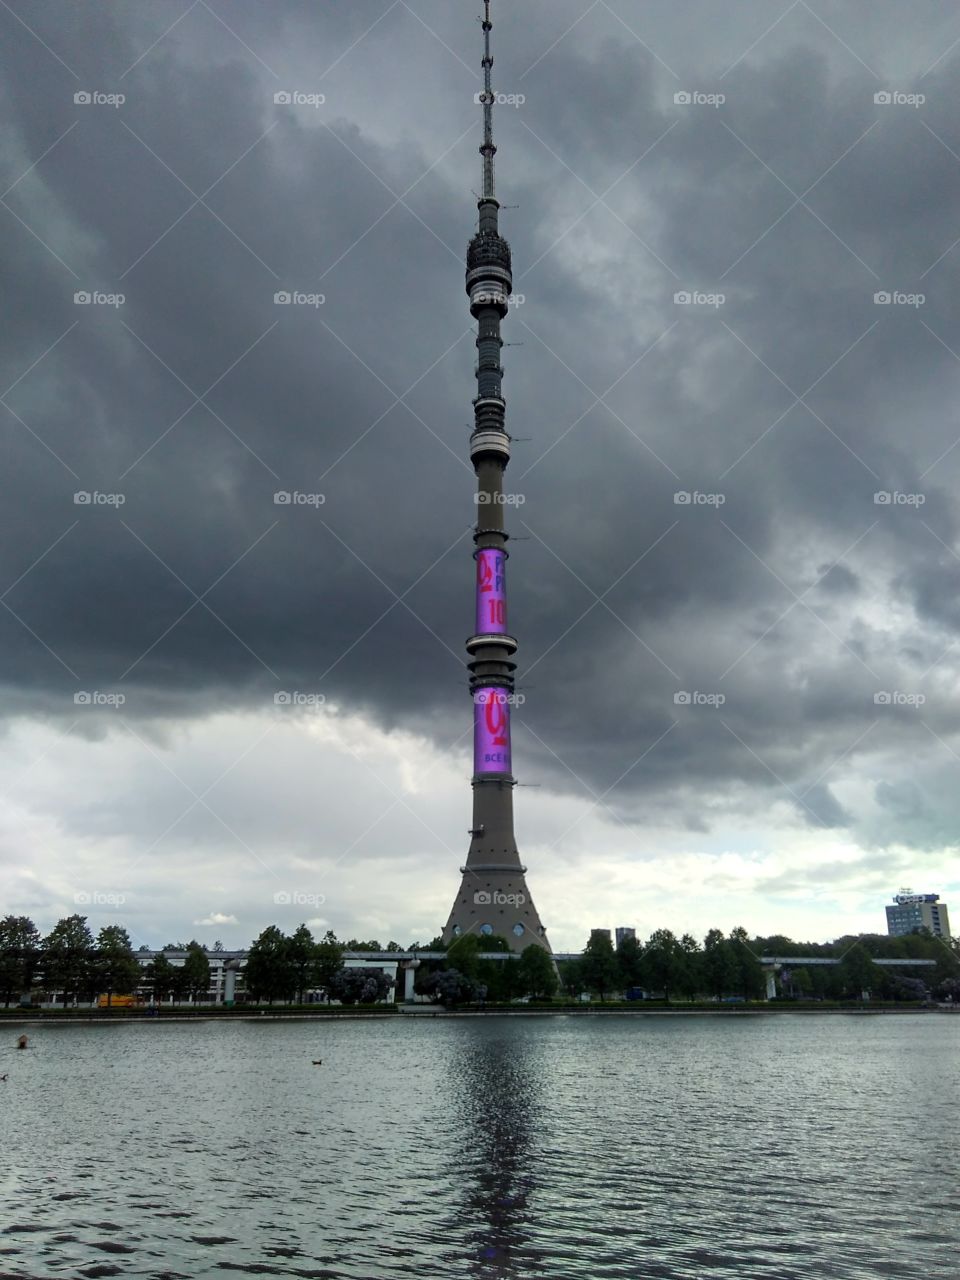 Moscow Ostankino TV Tower.